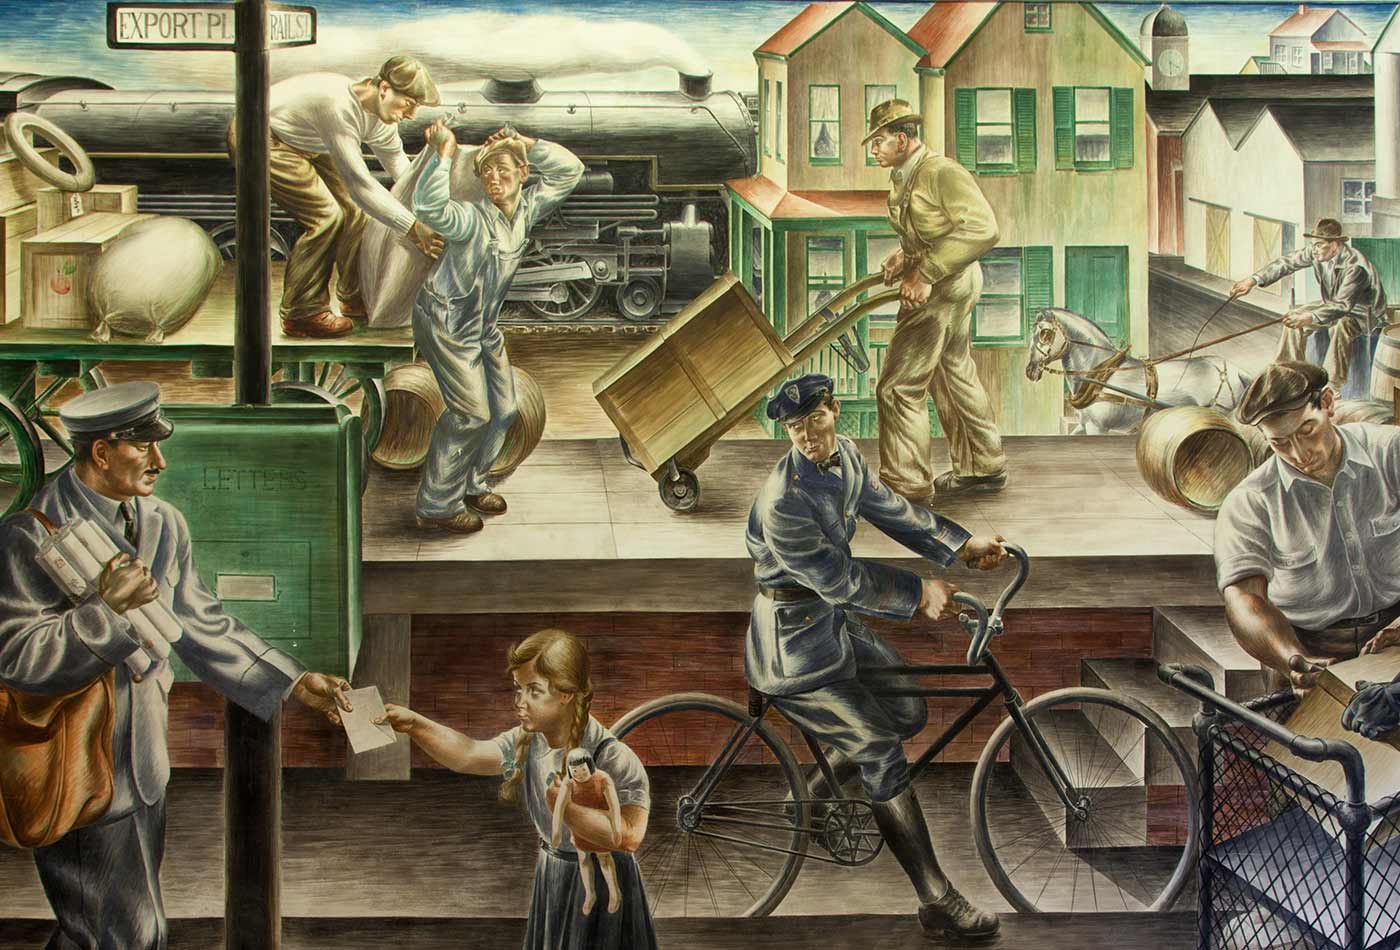 Photograph of mural "Transportation of the Mail," by Alfredo de Giorgio Crimi, 1937.